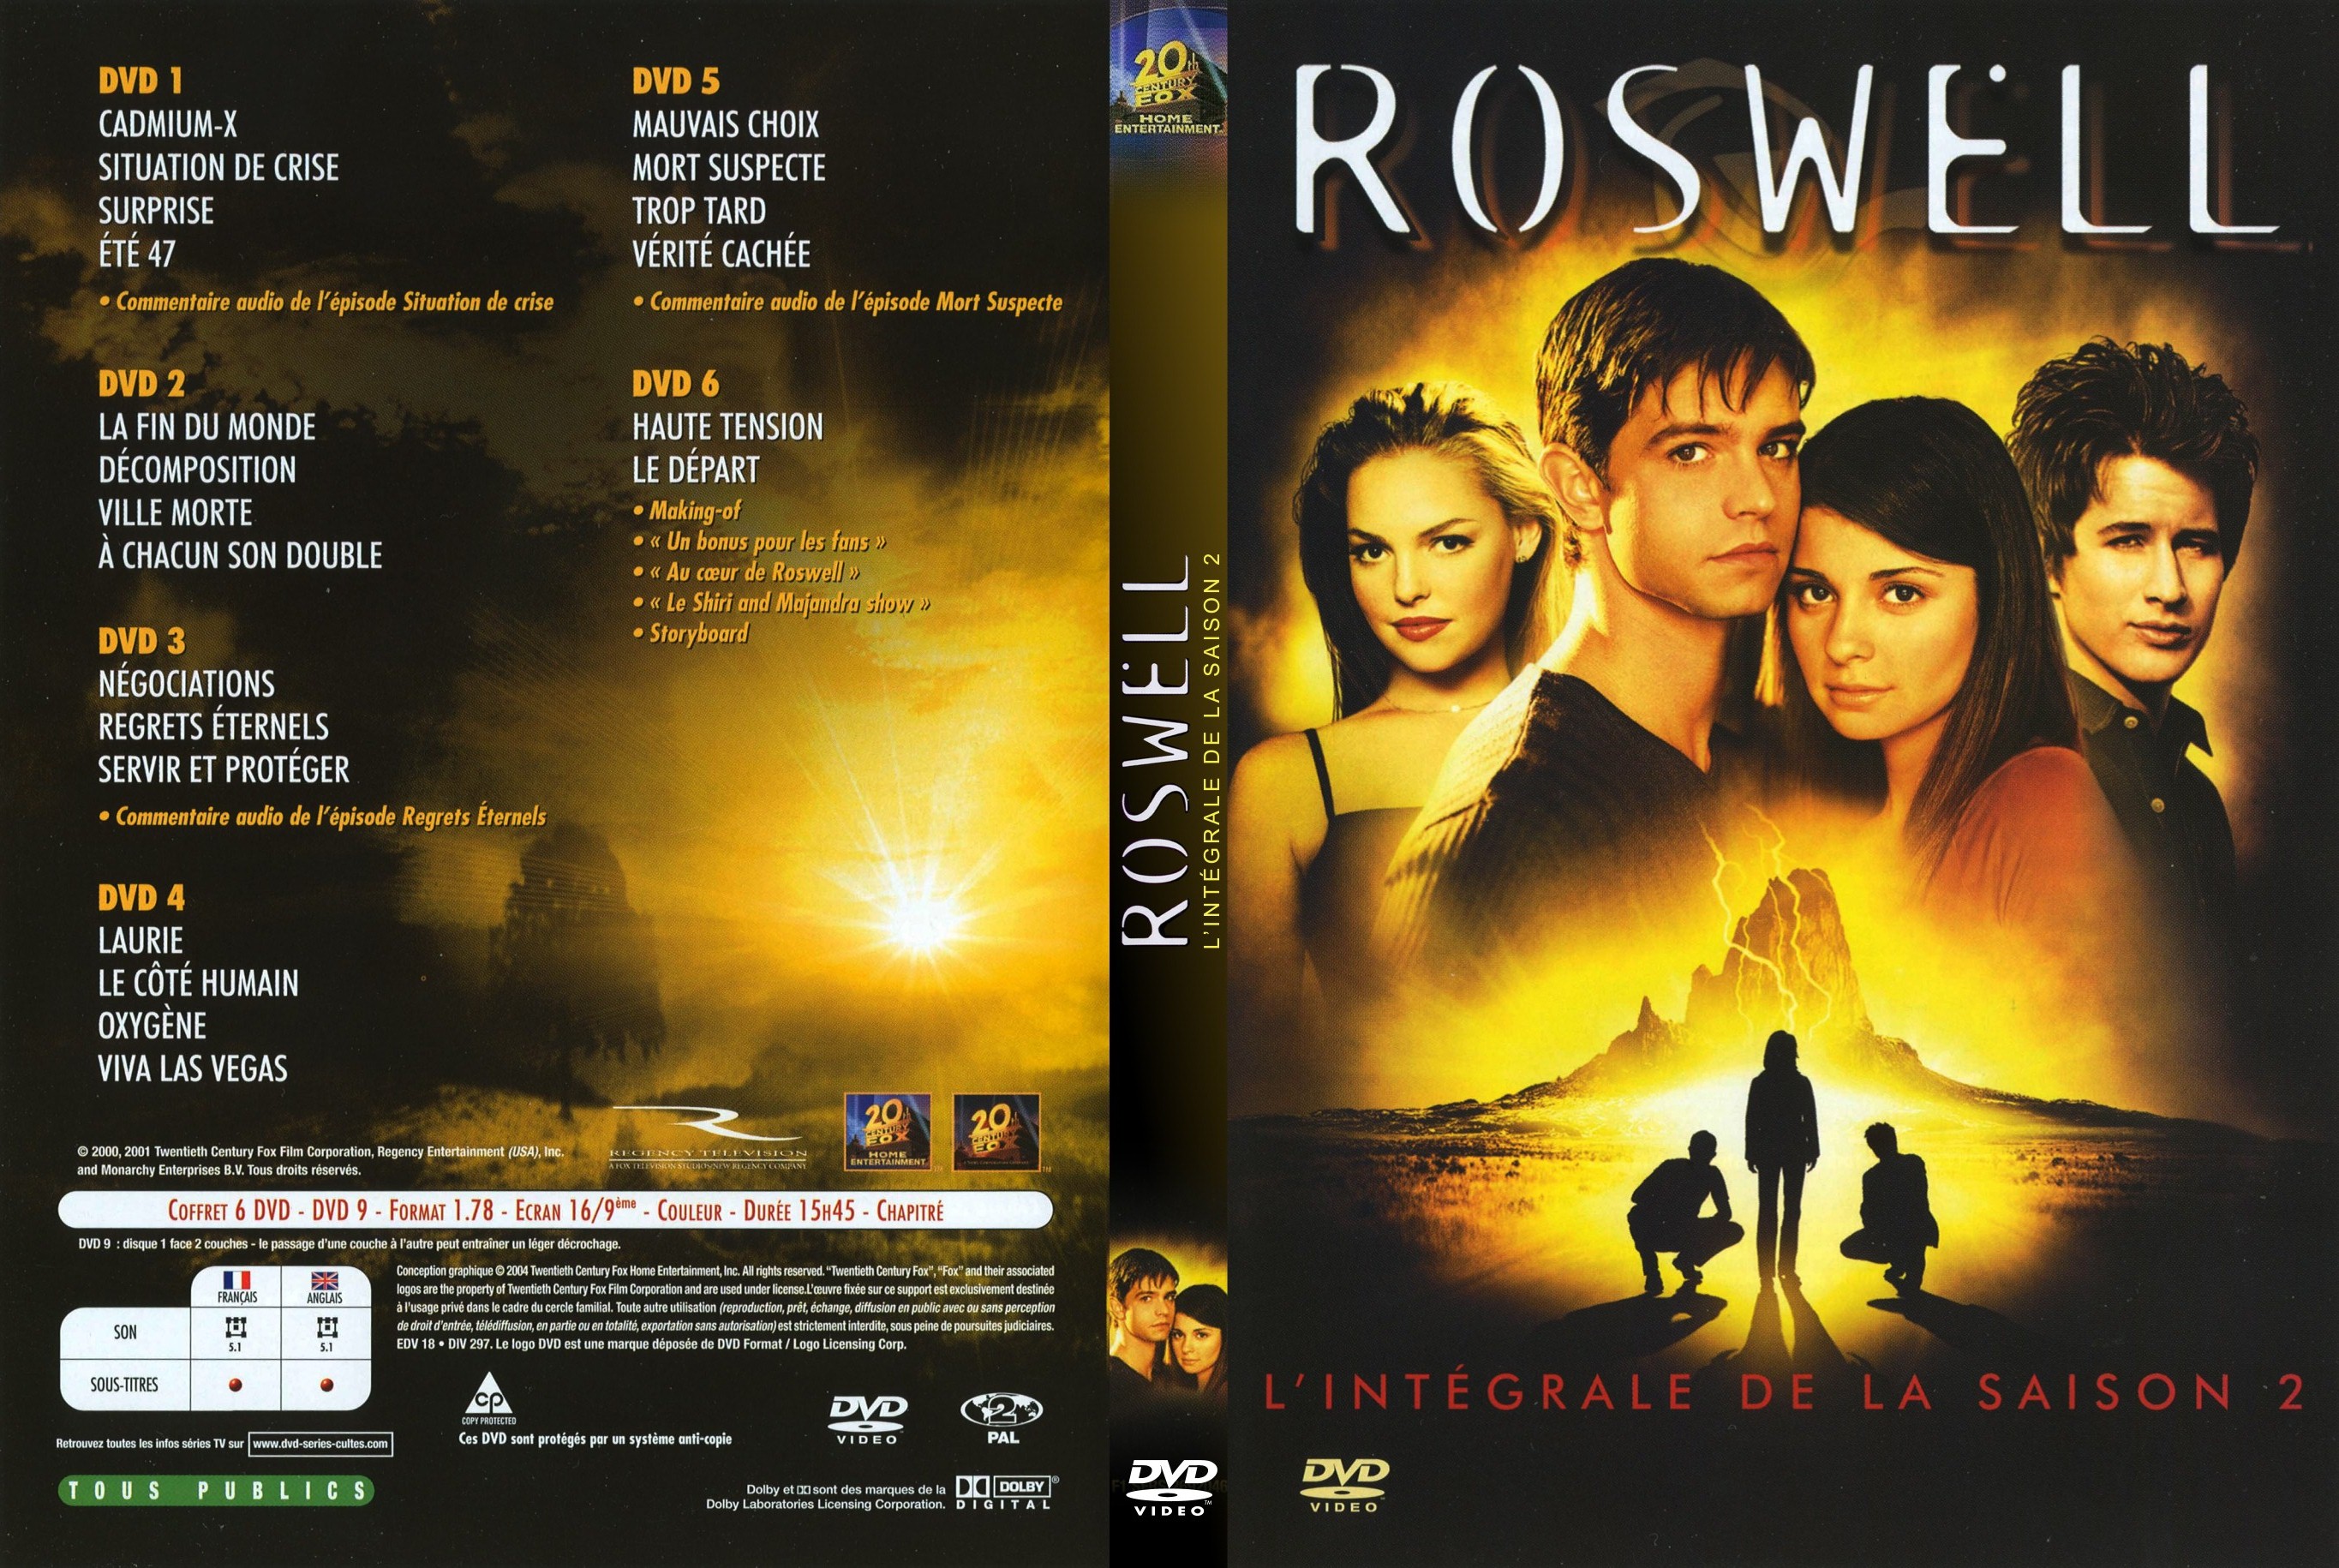 Jaquette DVD Roswell saison 2 custom